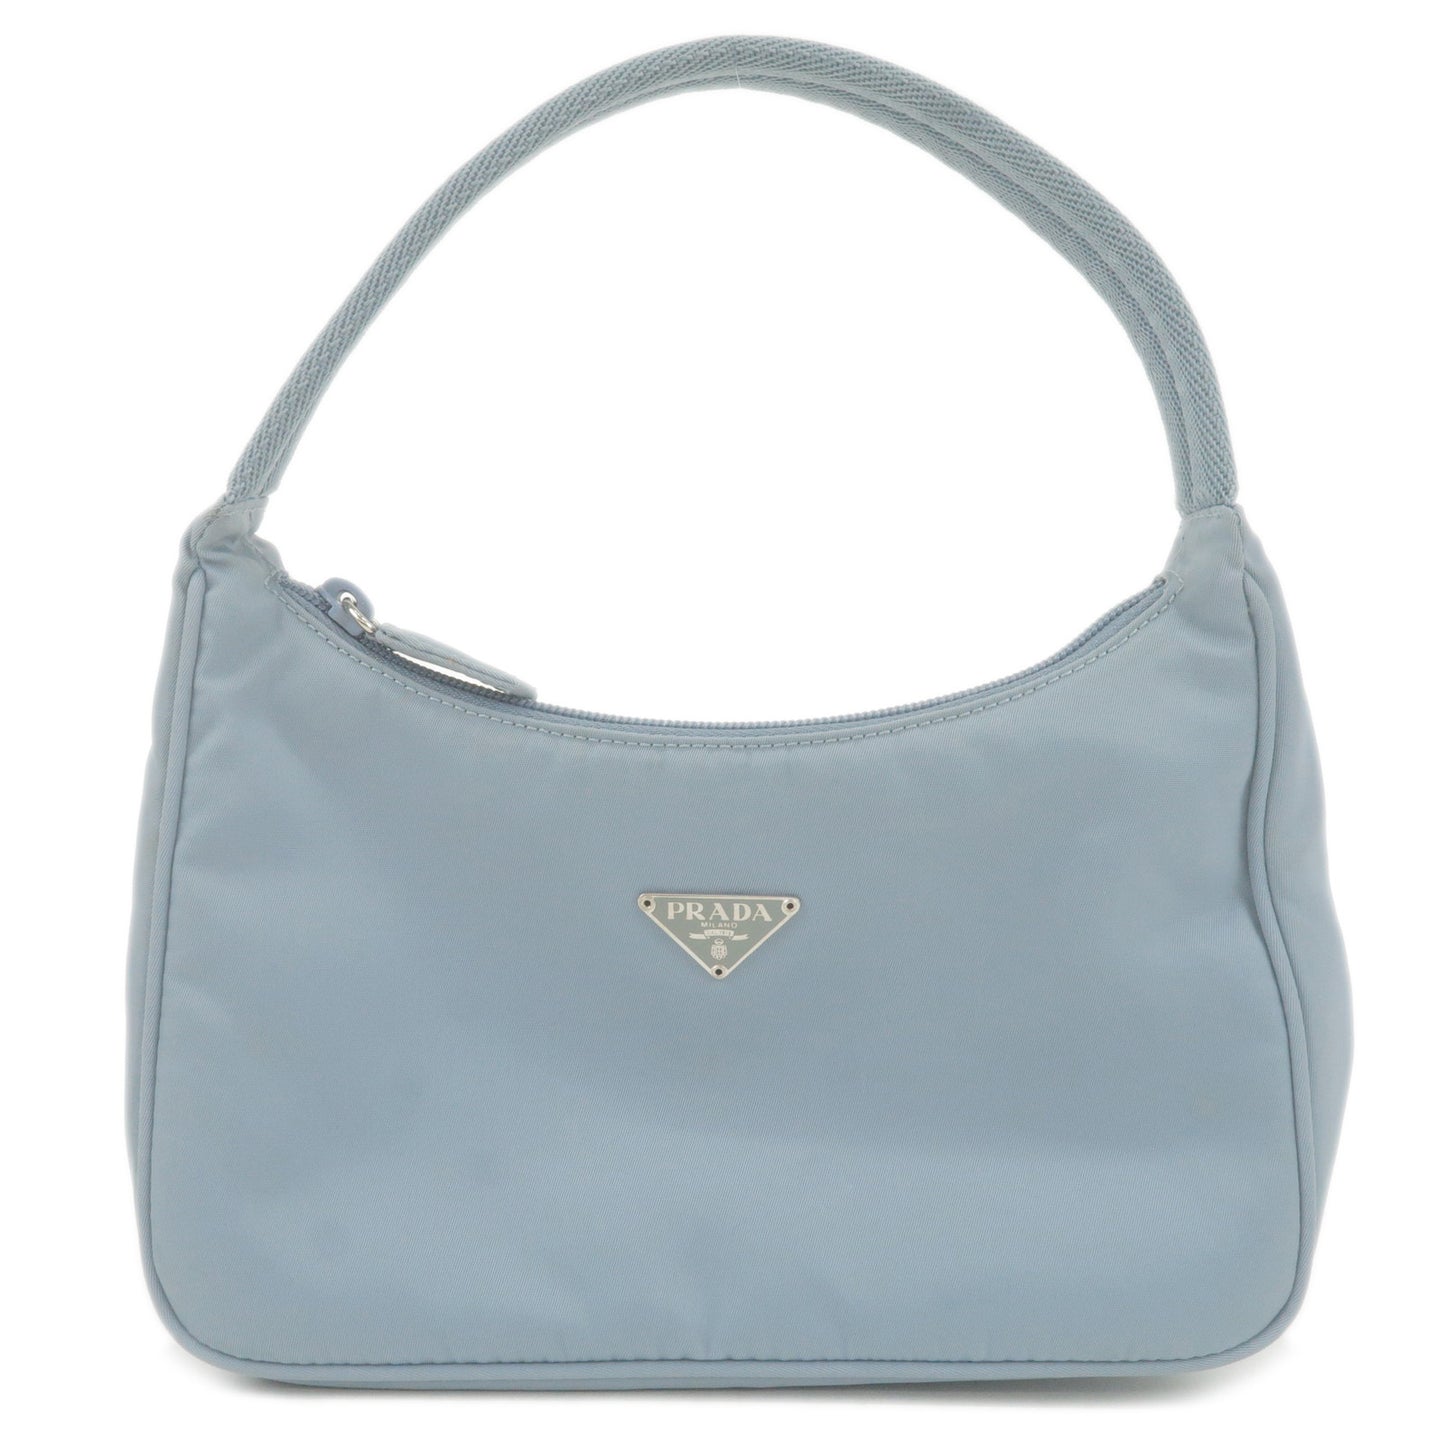 PRADA-Logo-Nylon-Canvas-Hand-Bag-Pouch-Purse-Light-Blue-MV515